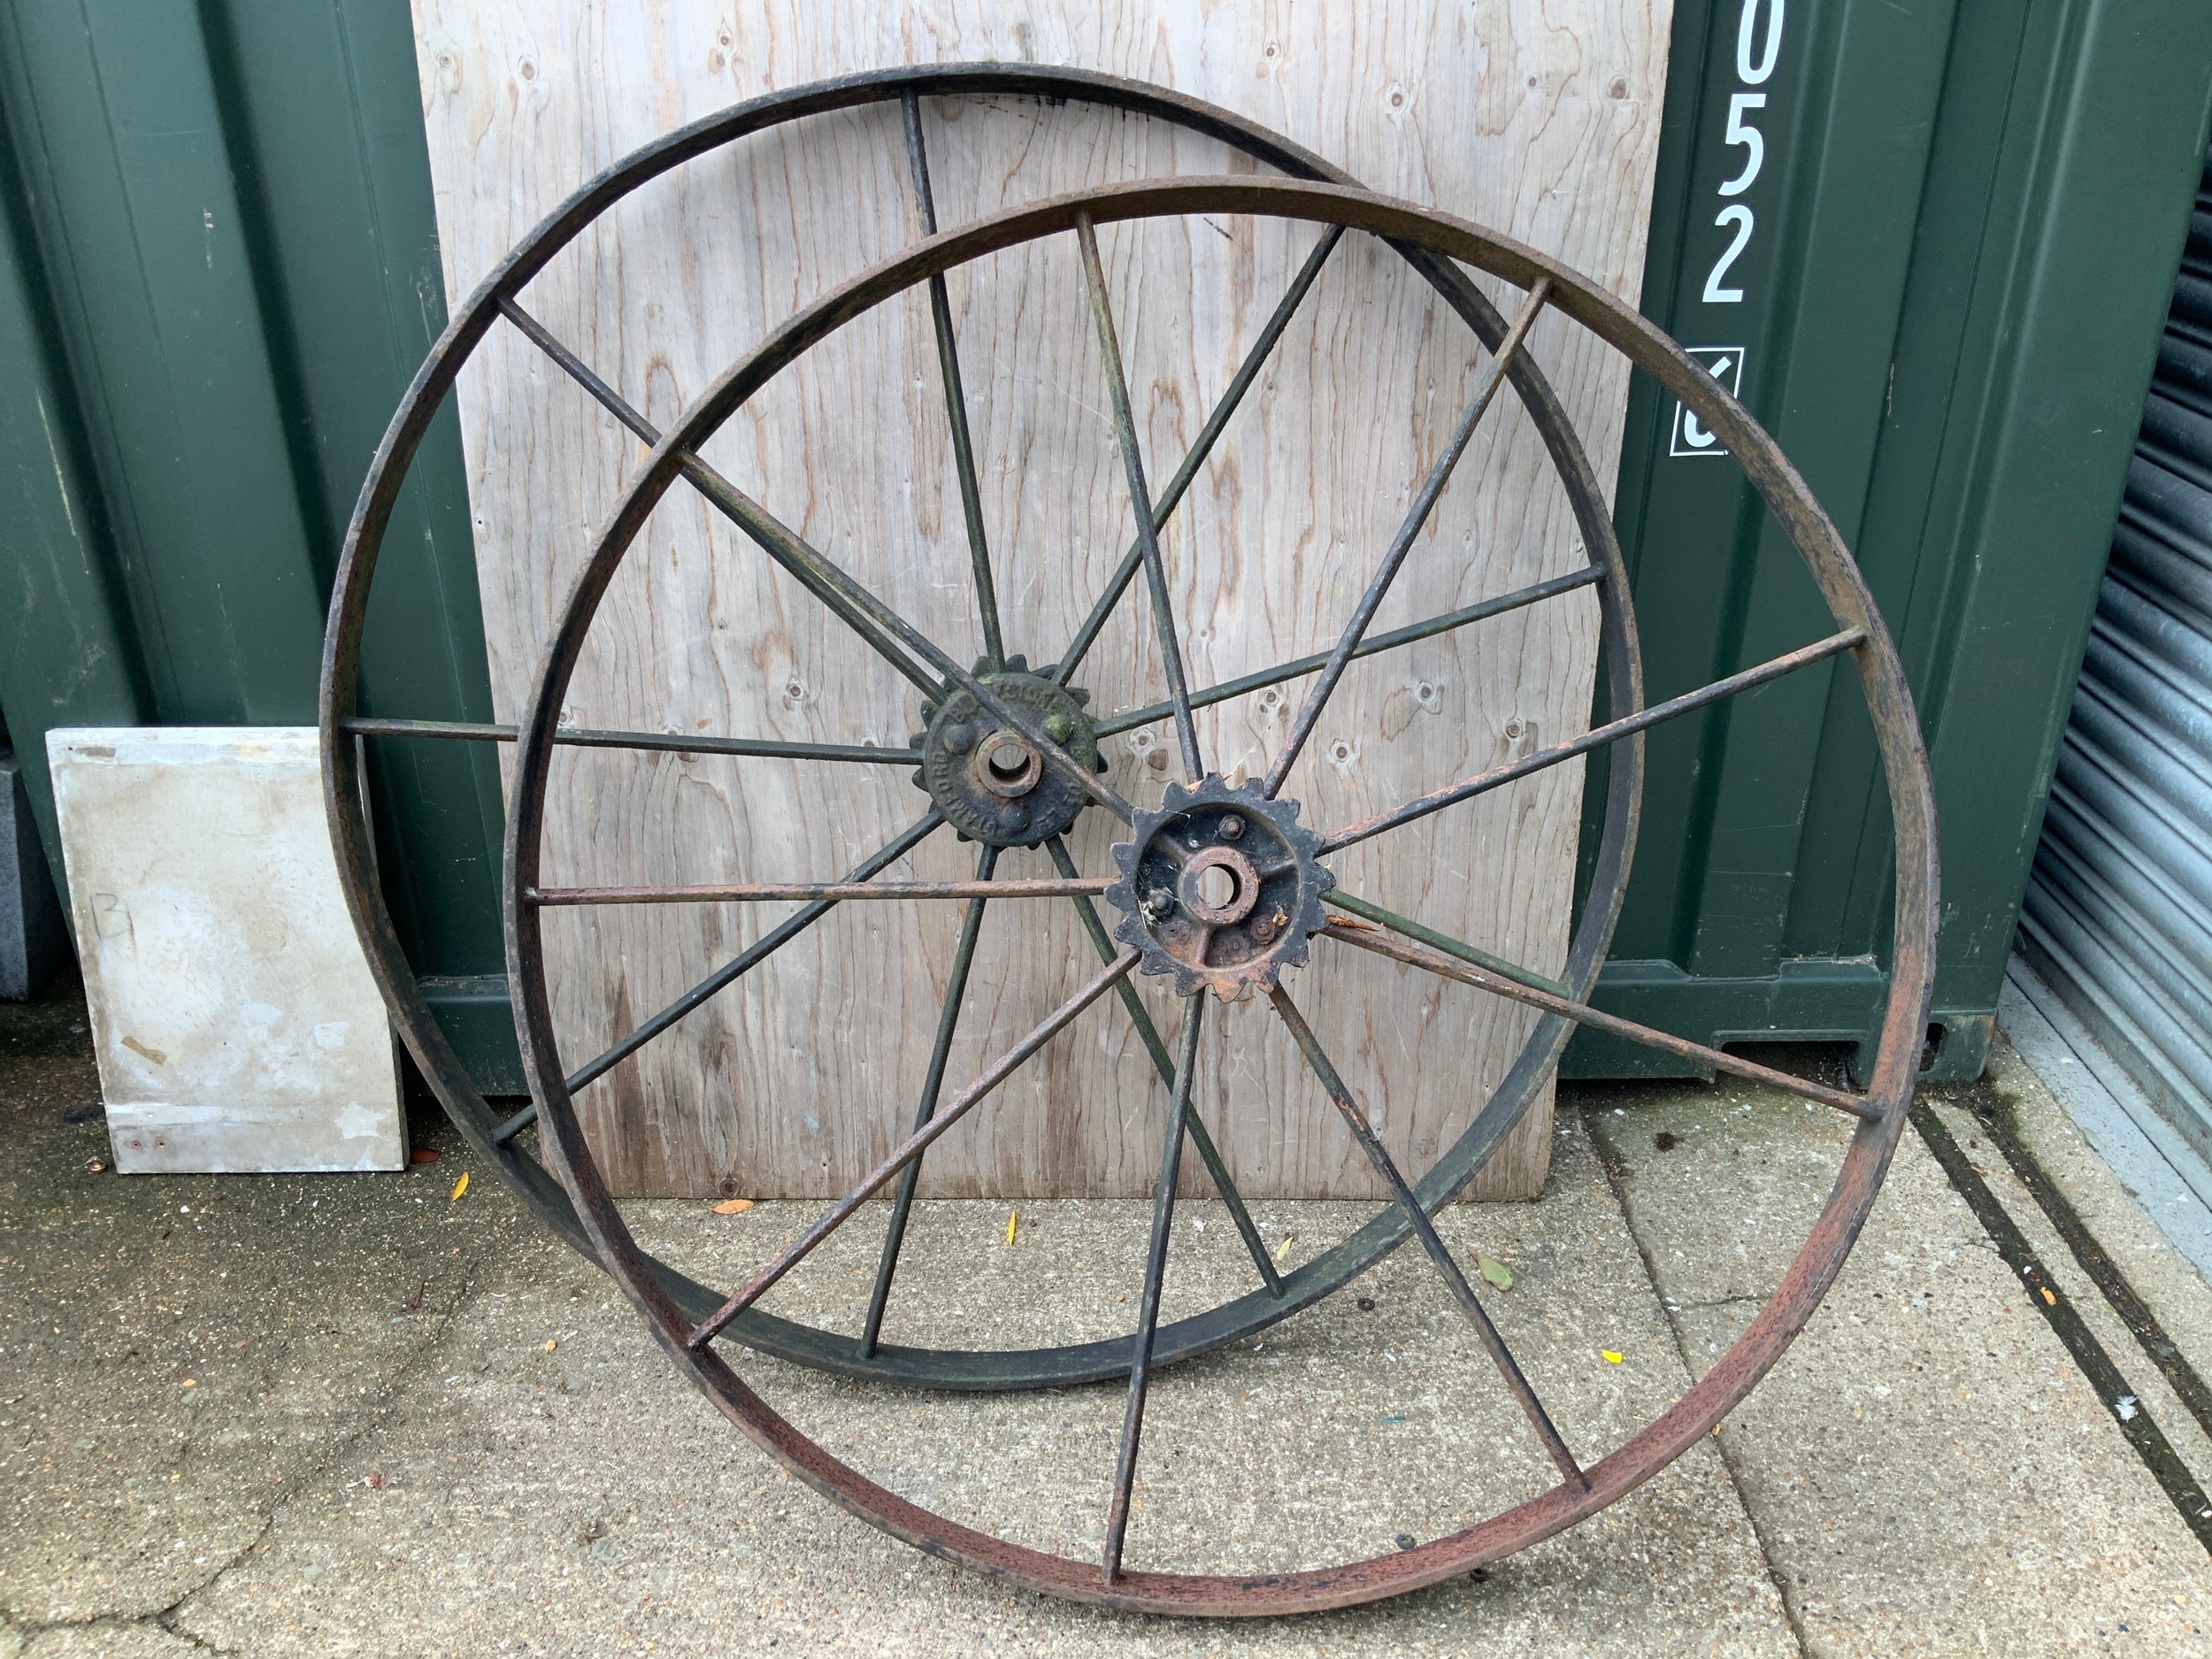 Pair of Large Iron Wheels - 132cm Diameter